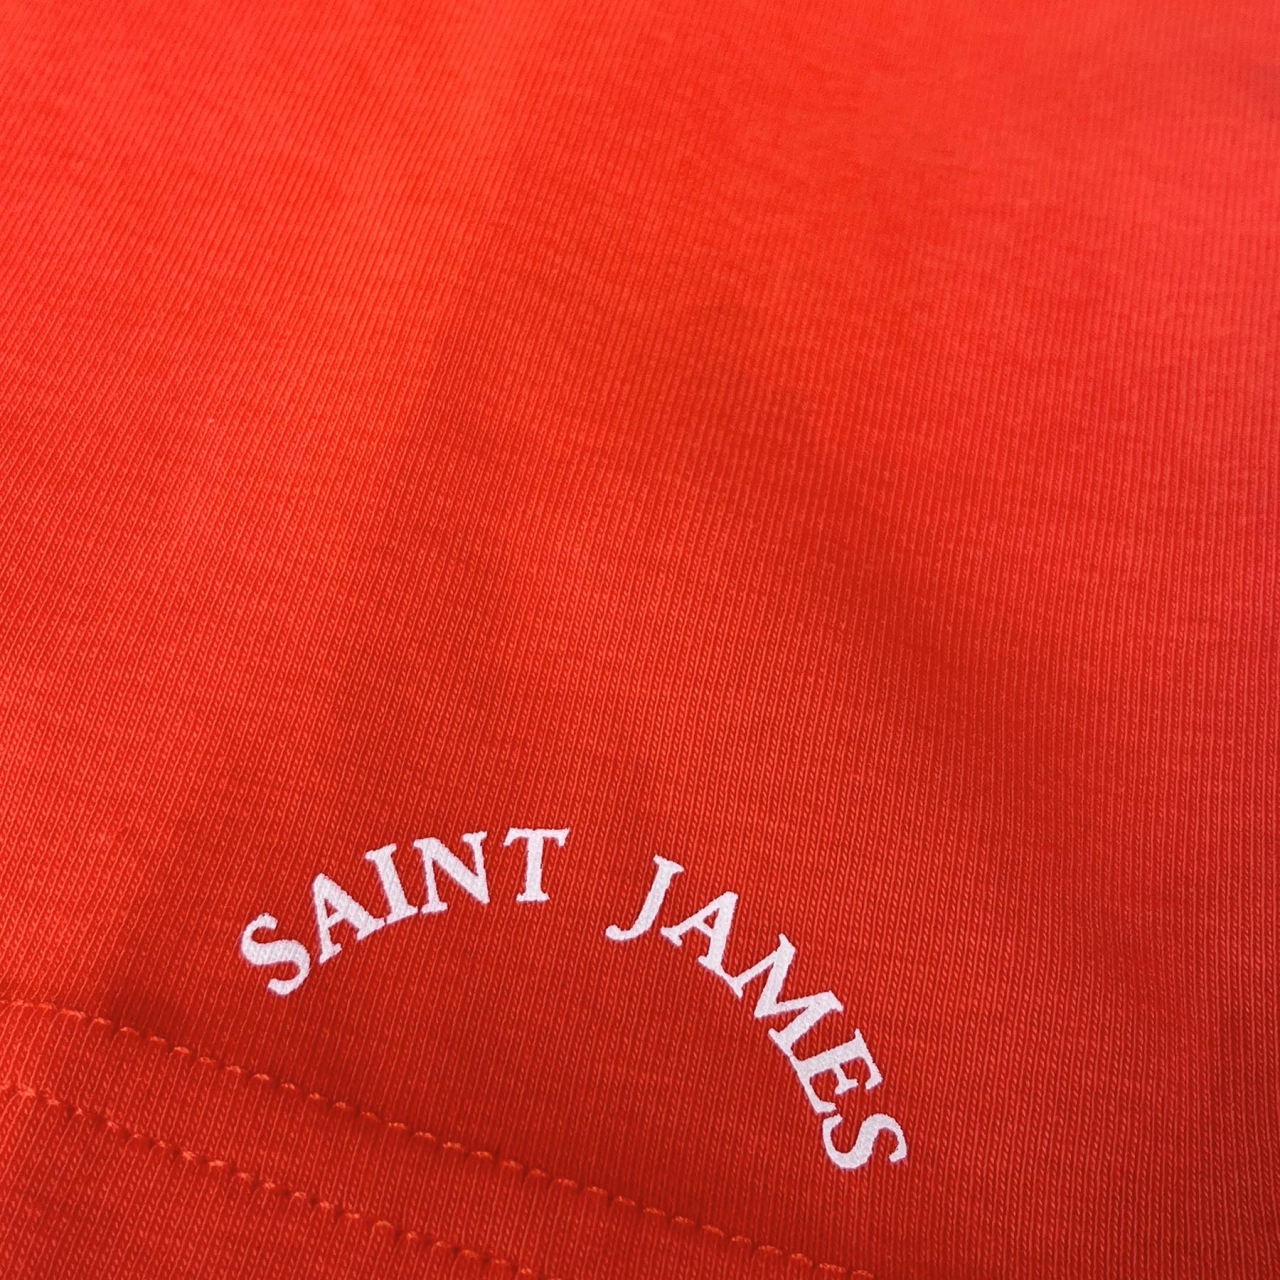 Saint James Ajaccio - Sanguine